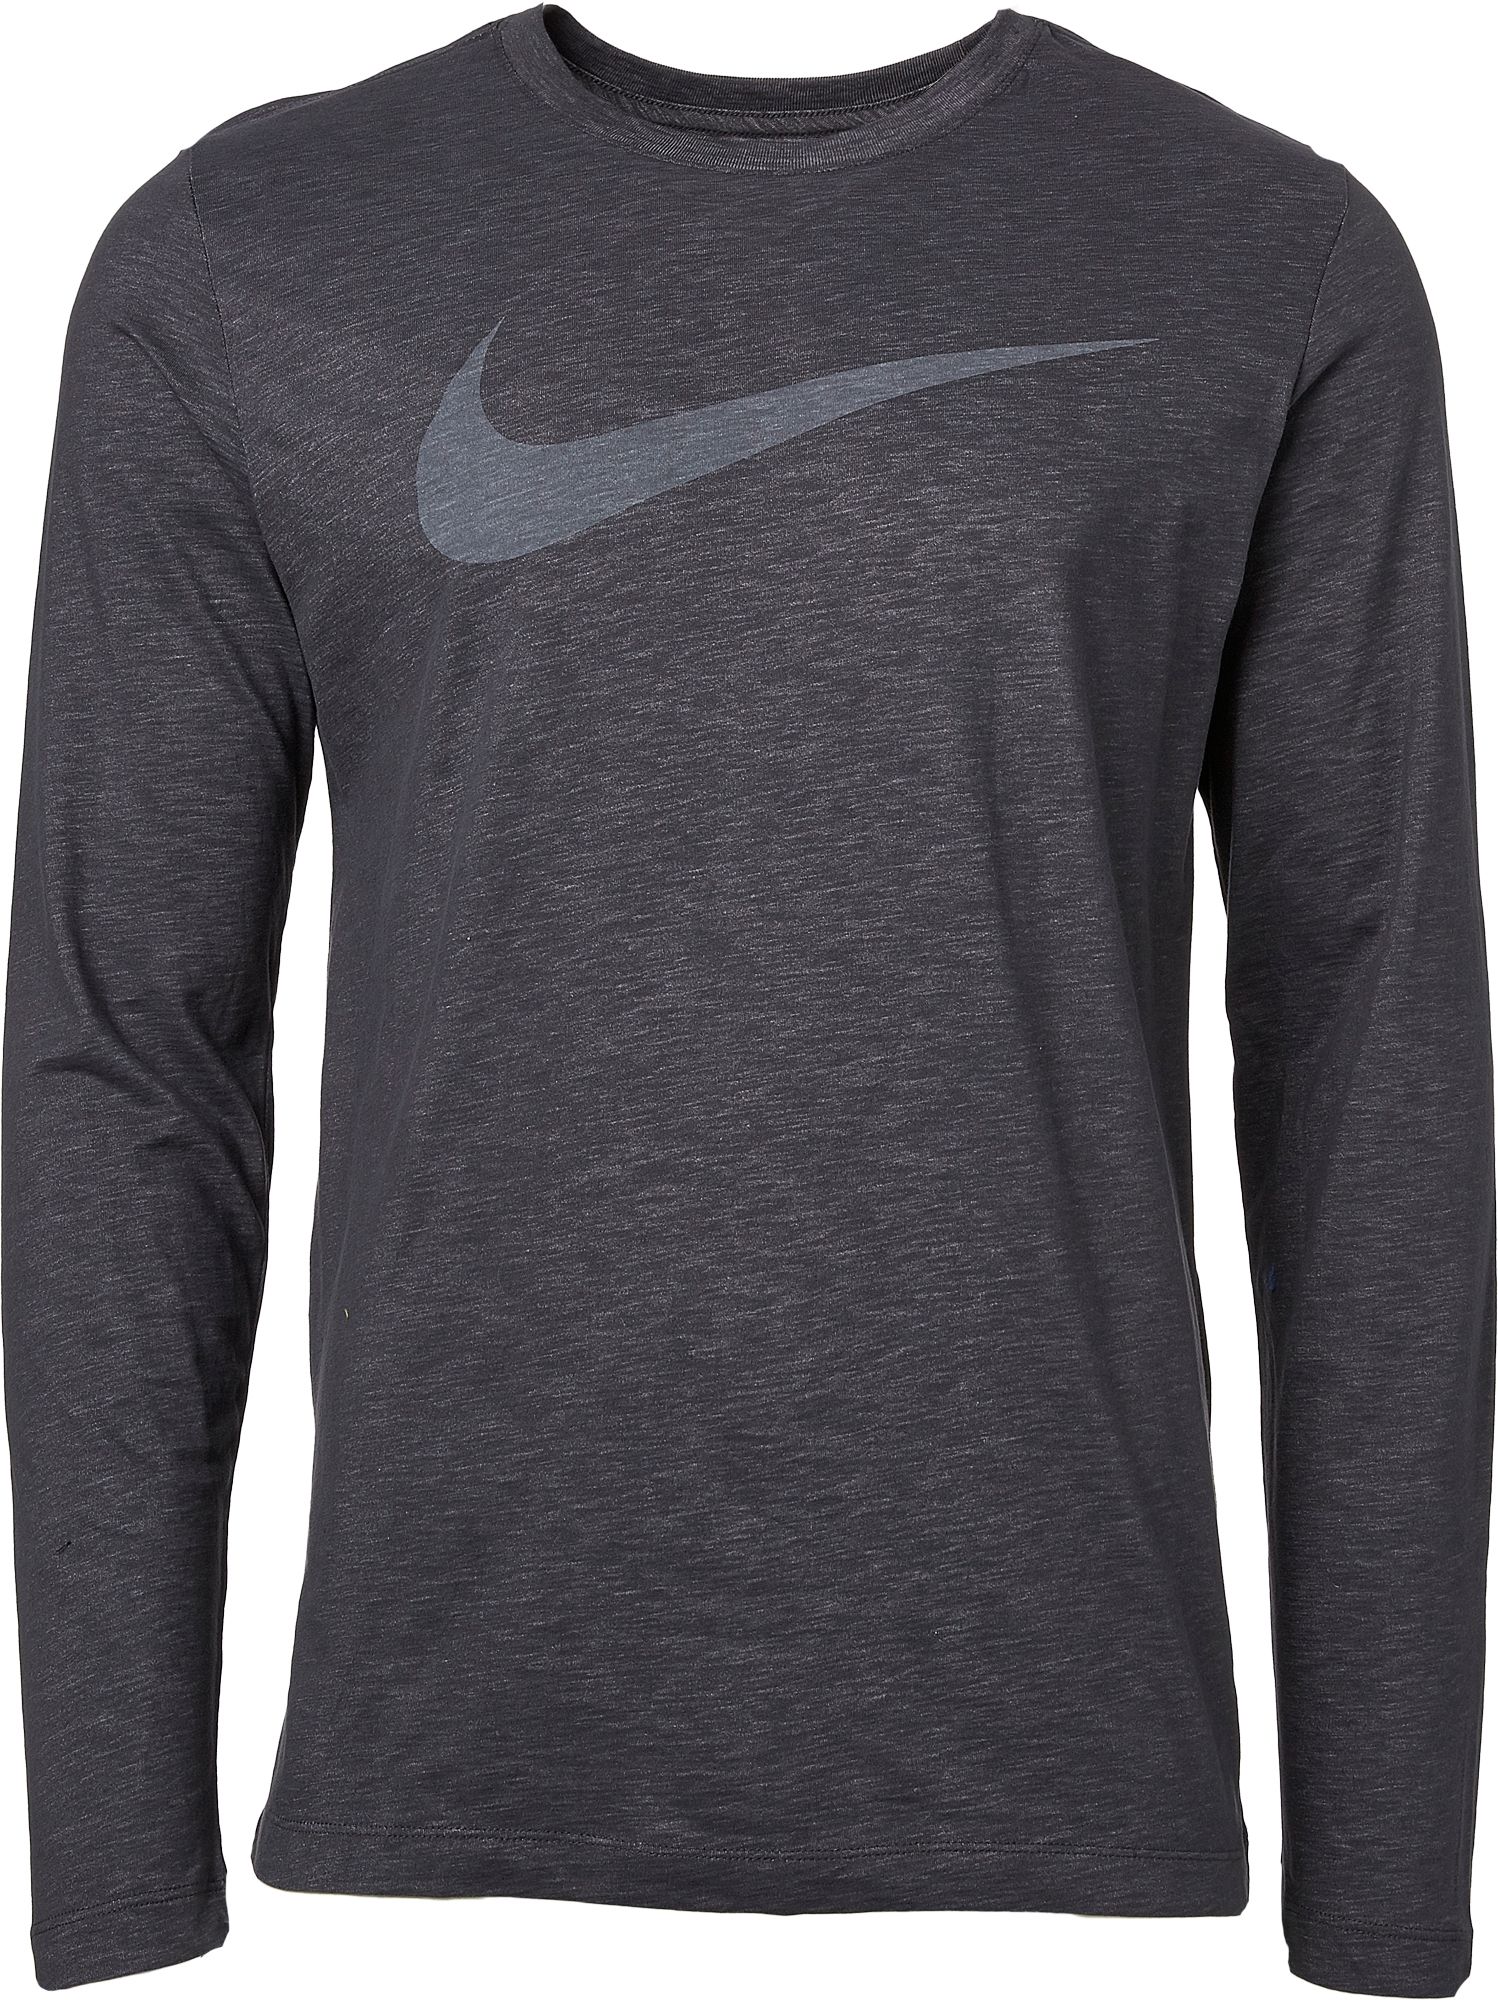 Nike Men's Dri-FIT Training Long Sleeve Shirt - .97 - .97